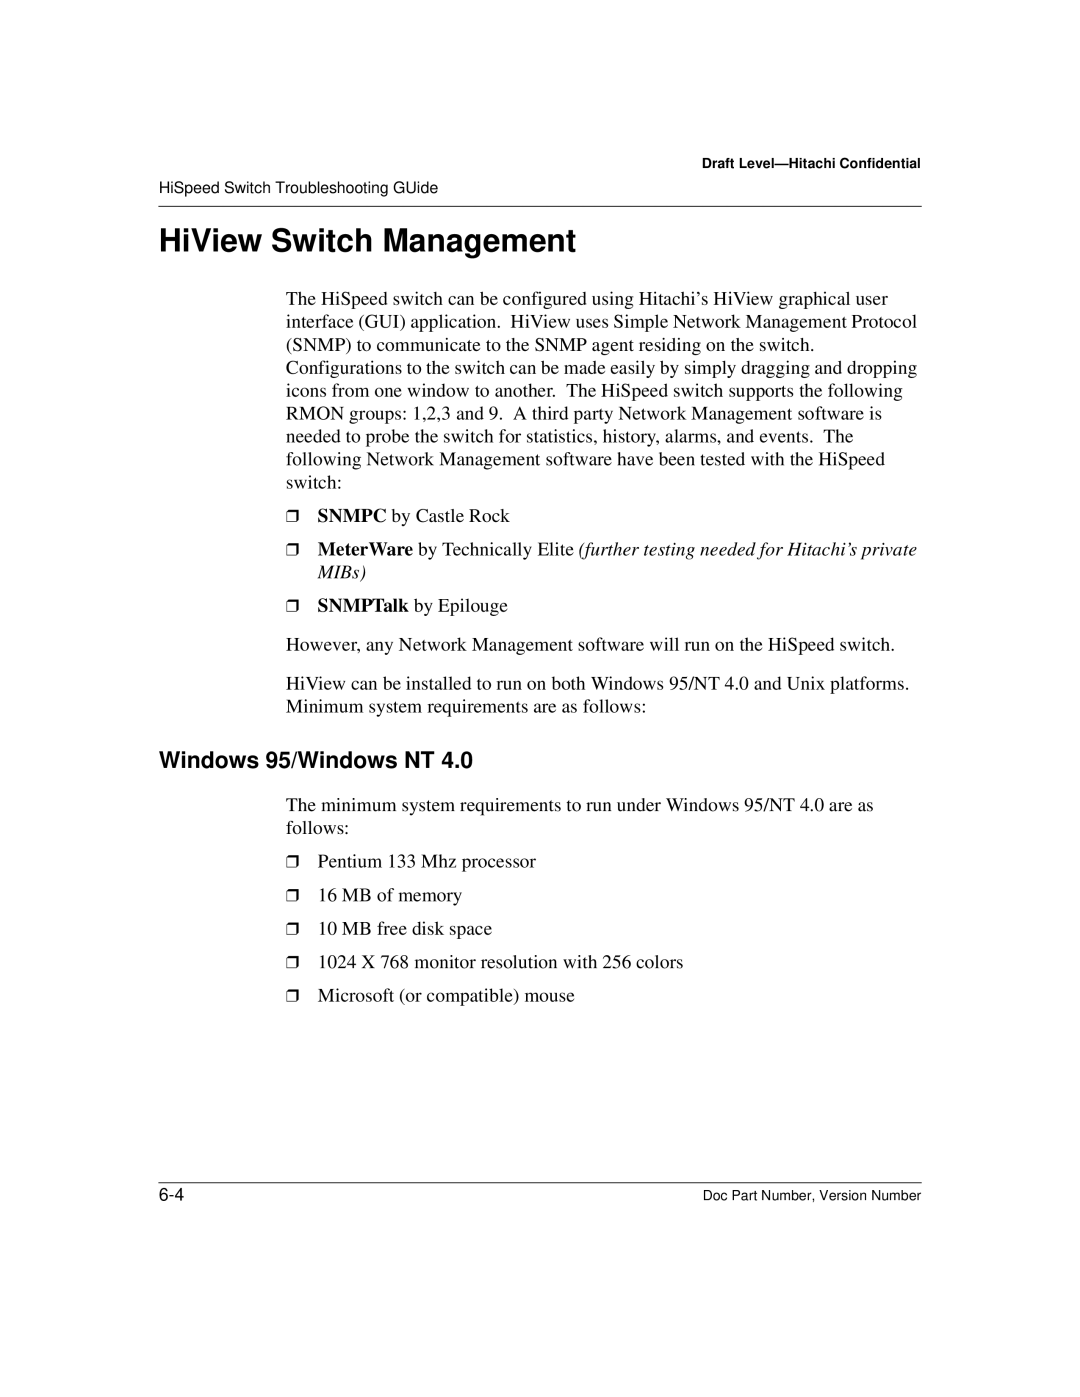 Hitachi US7070447-001 manual HiView Switch Management, Windows 95/Windows NT 